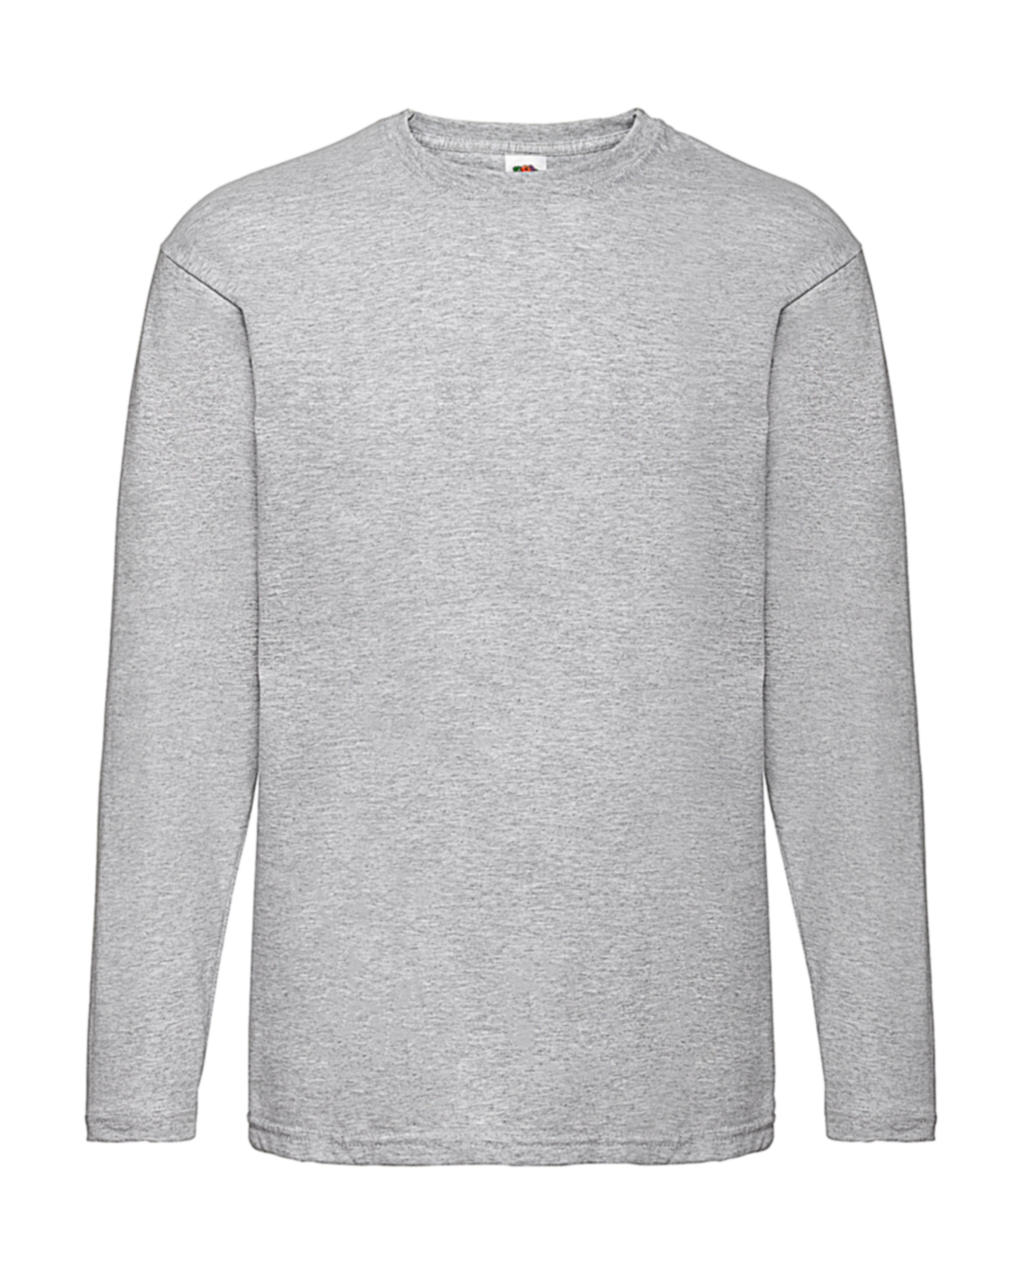 Tričko s dlhými rukávmi Value Weight - heather grey